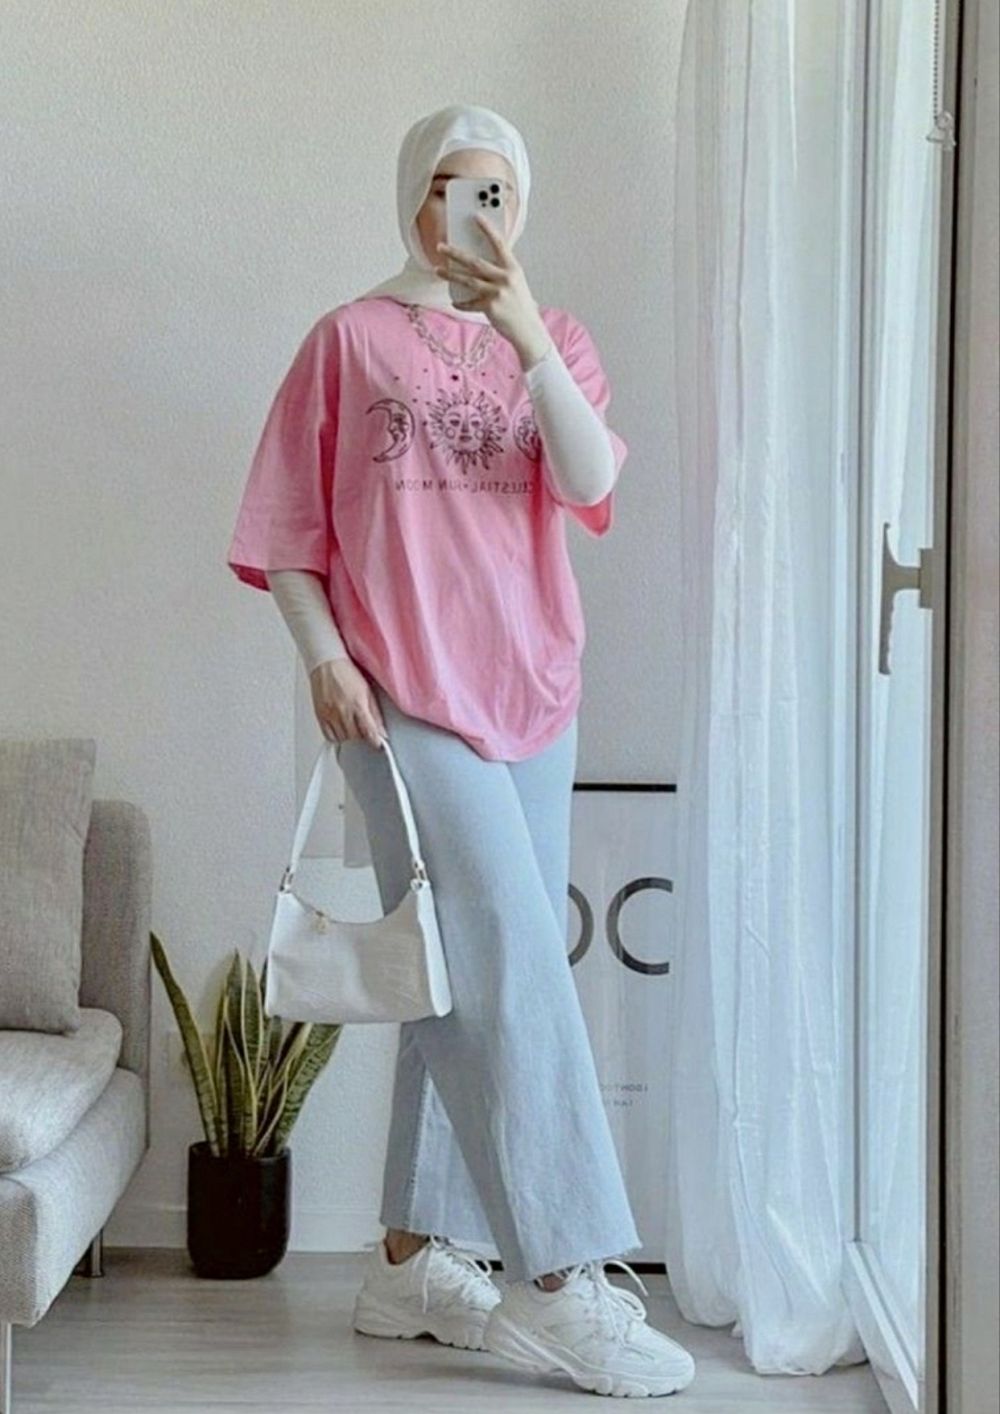 9 Ide Outfit Hijabers Pakai Kulot Jeans, Tampil Stylish saat Bukber!